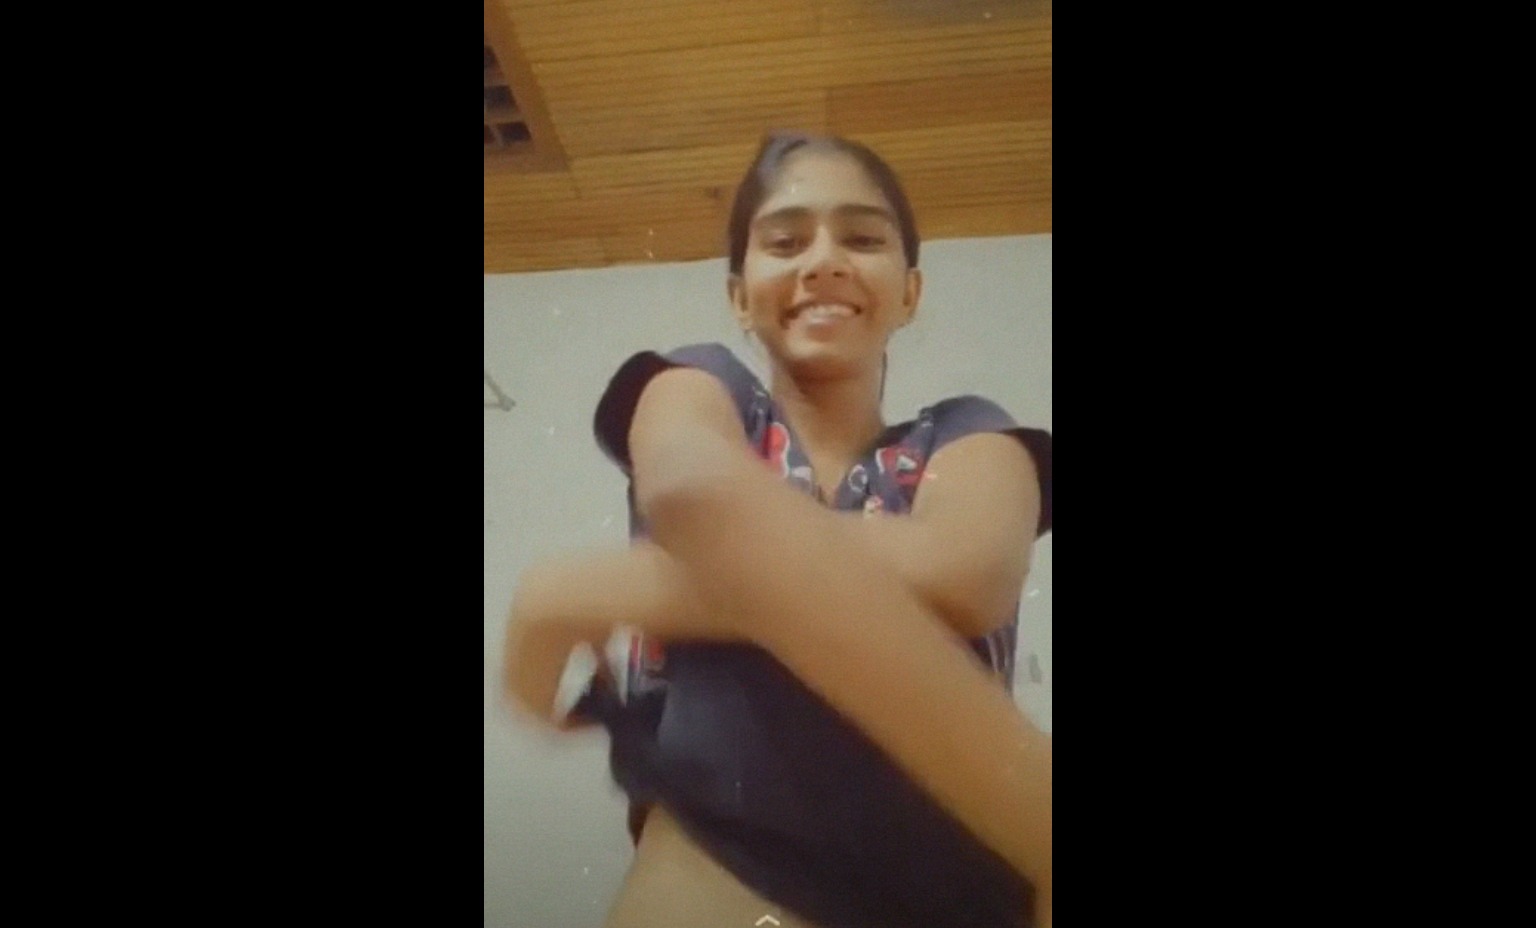 Teen Girls Stripping Naked - Strip video of Indian teenage girl